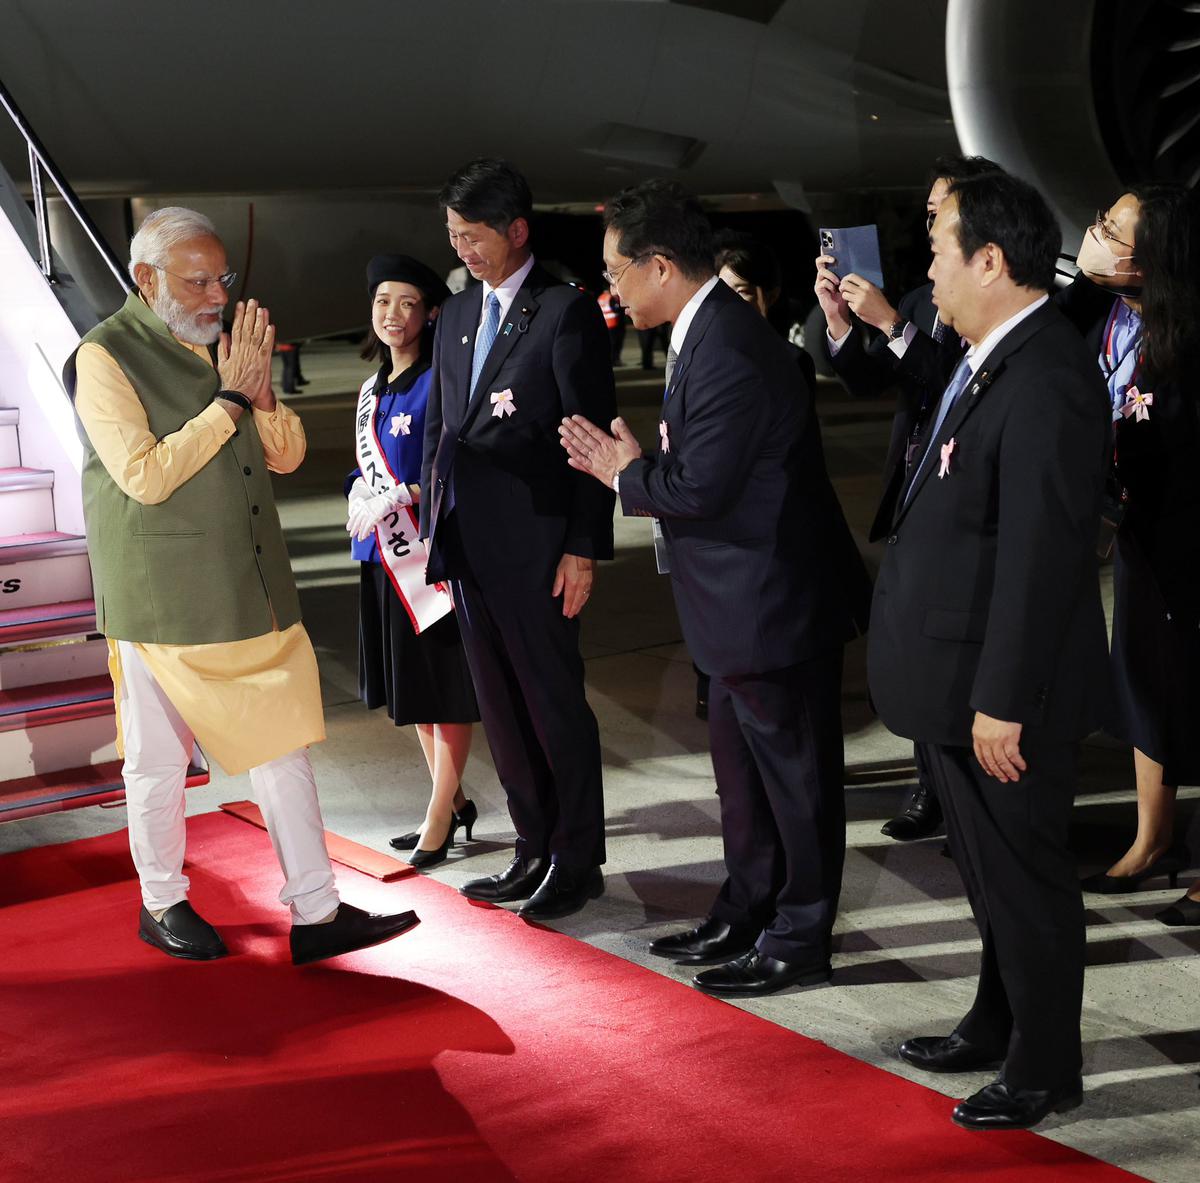 PM Modi arrives in Hiroshima for G7 and Quad summits - The Hindu